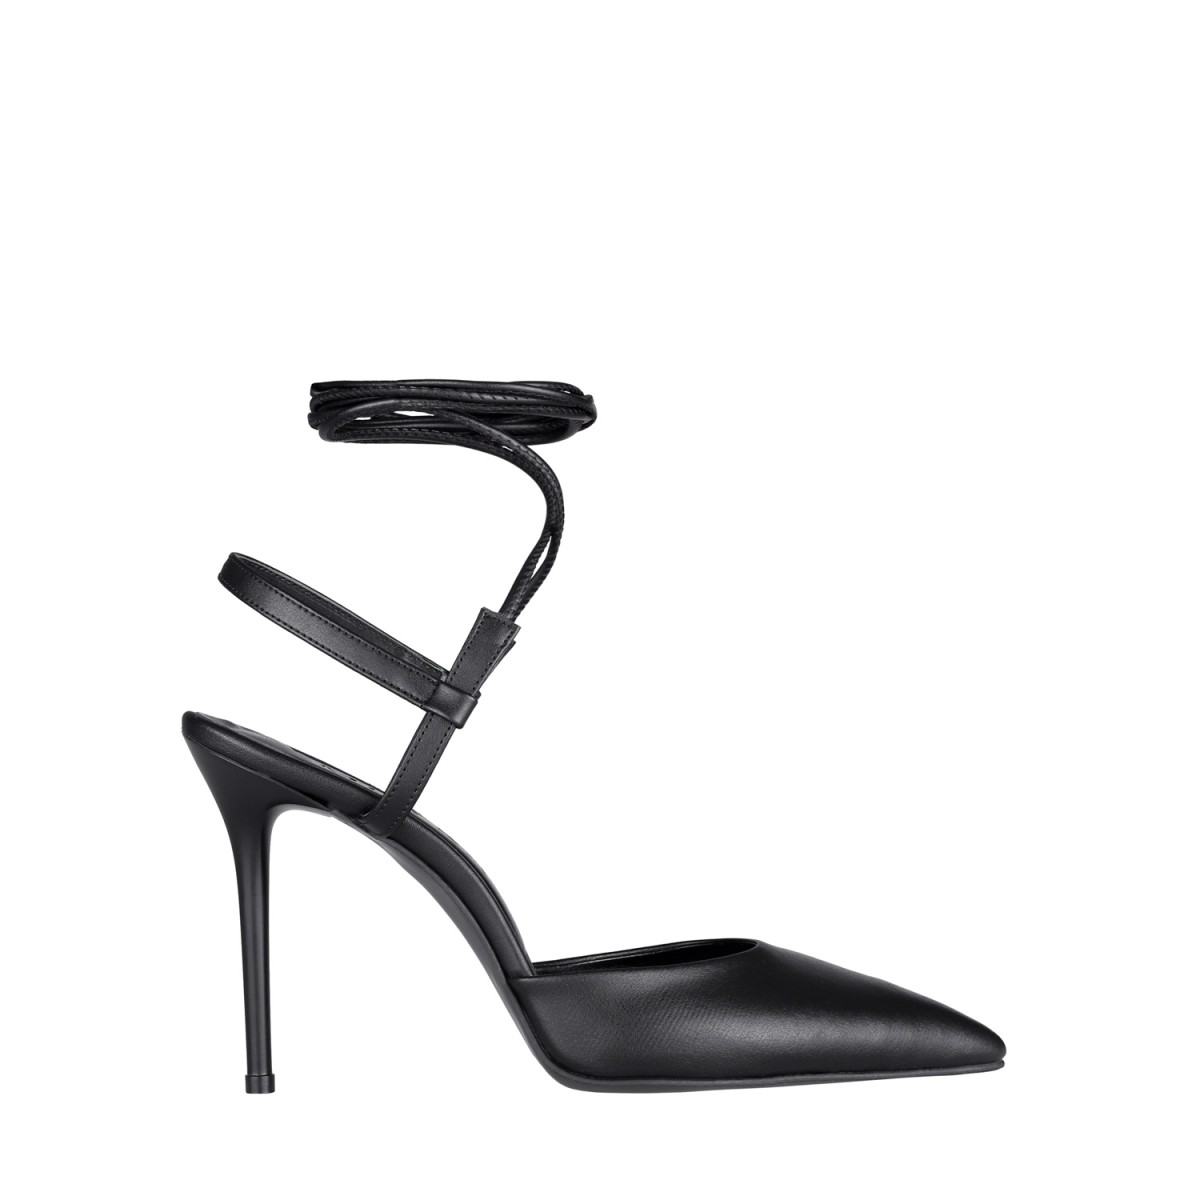 Victoria İnce Yüksek Topuklu Ayakkabı Stiletto Siyah